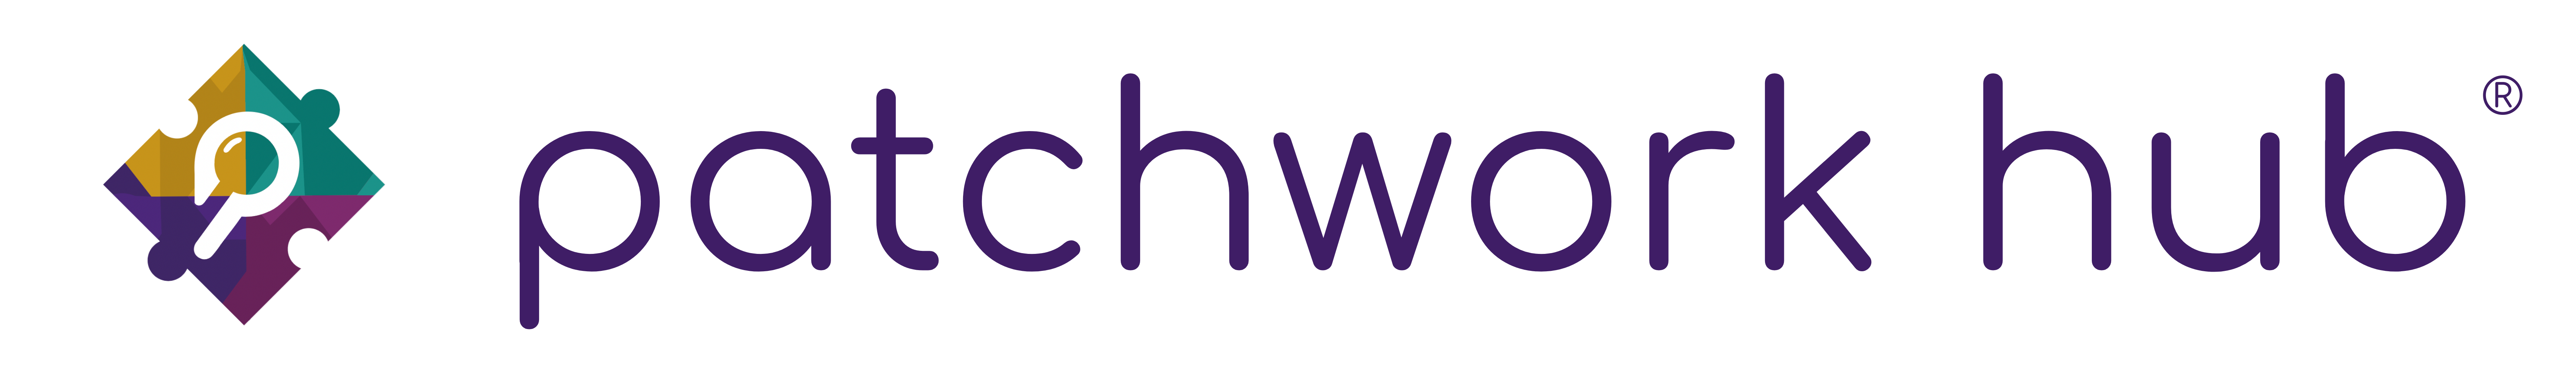 Patchworkhub.org Logo